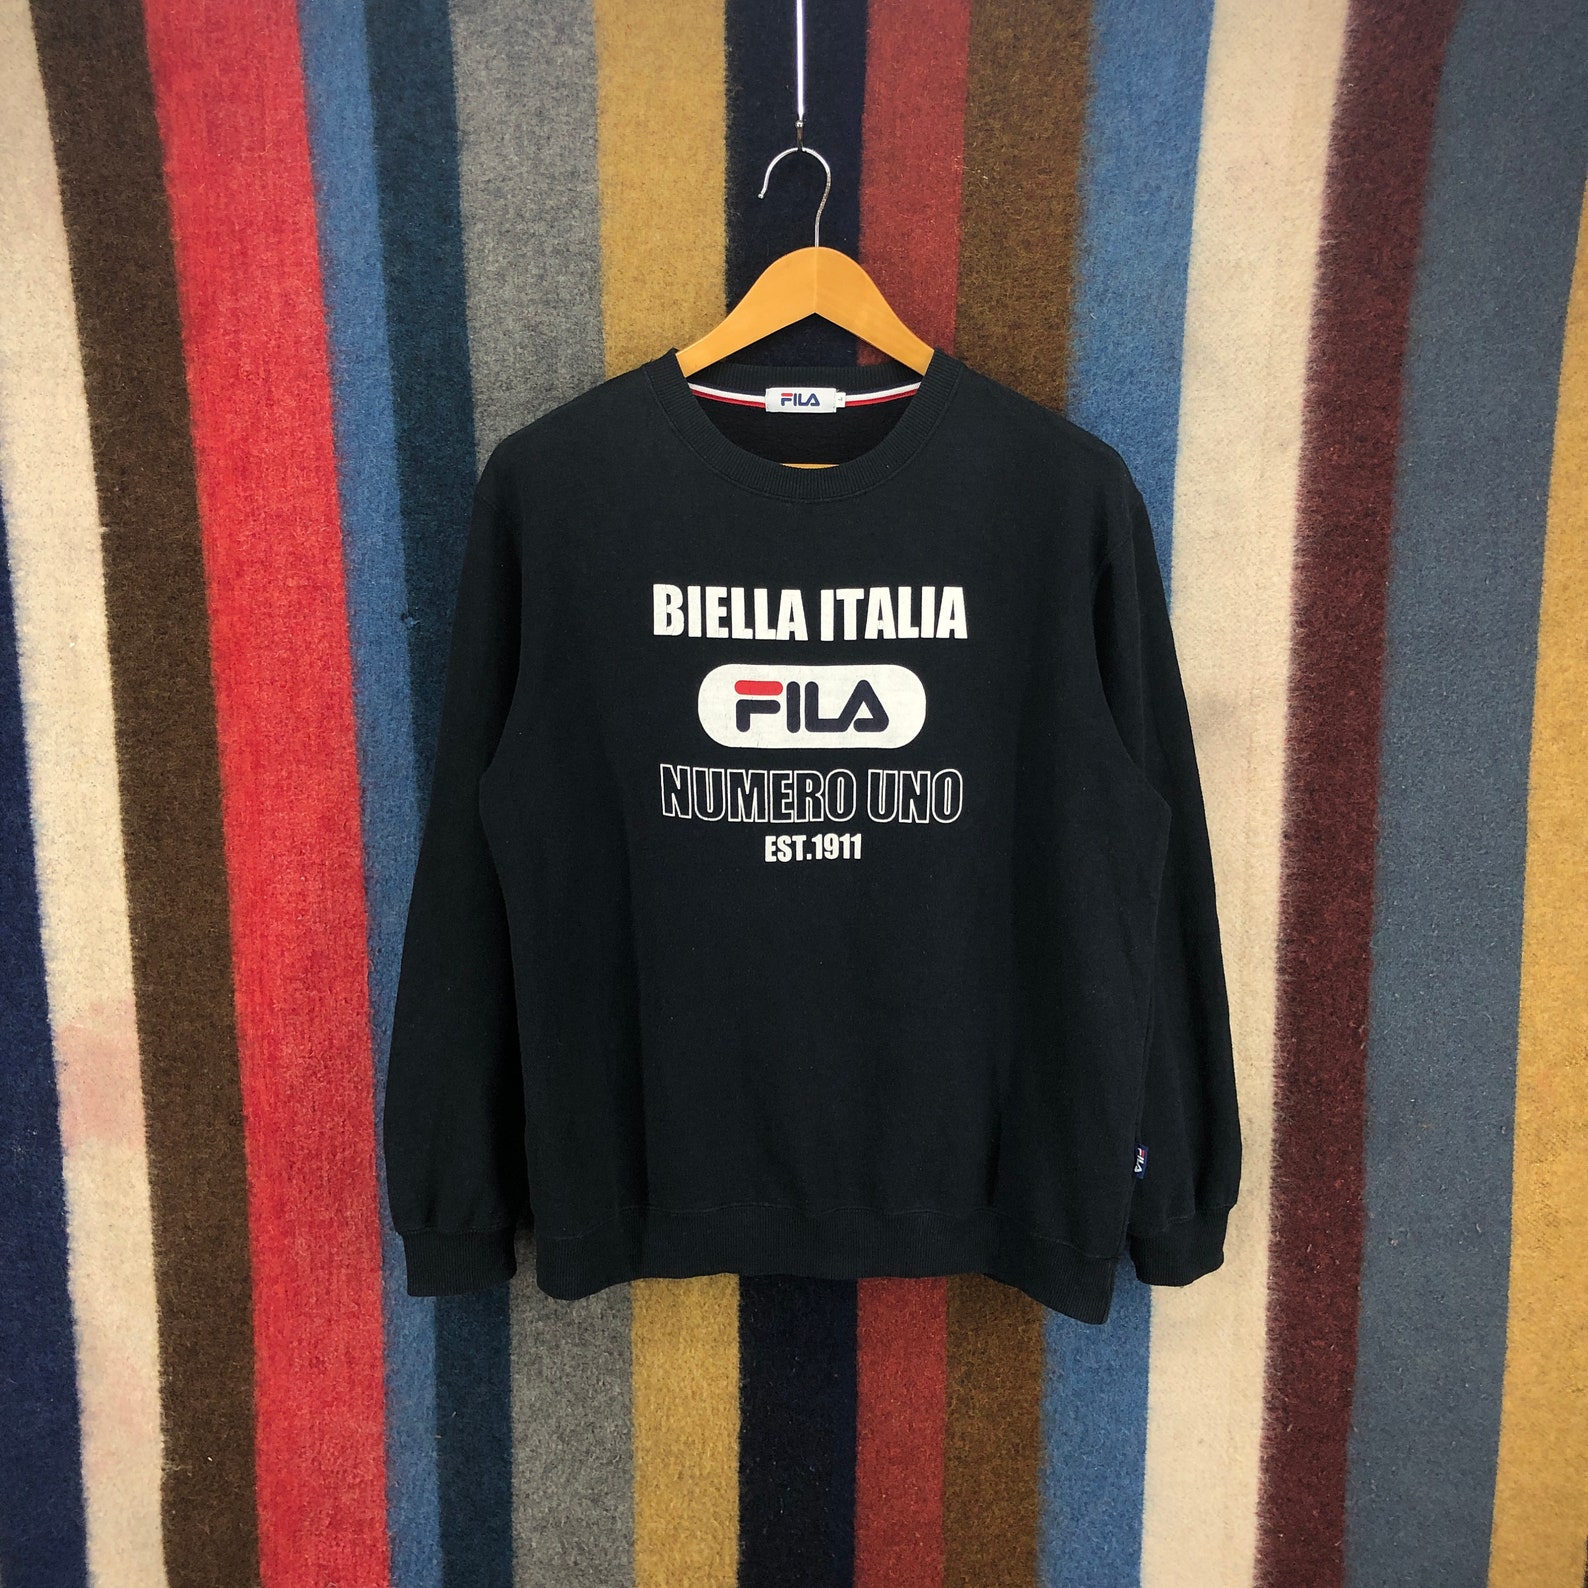 Vintage FILA BIELLA ITALIA Numero Uno est.1911 Sweatshirt | Etsy